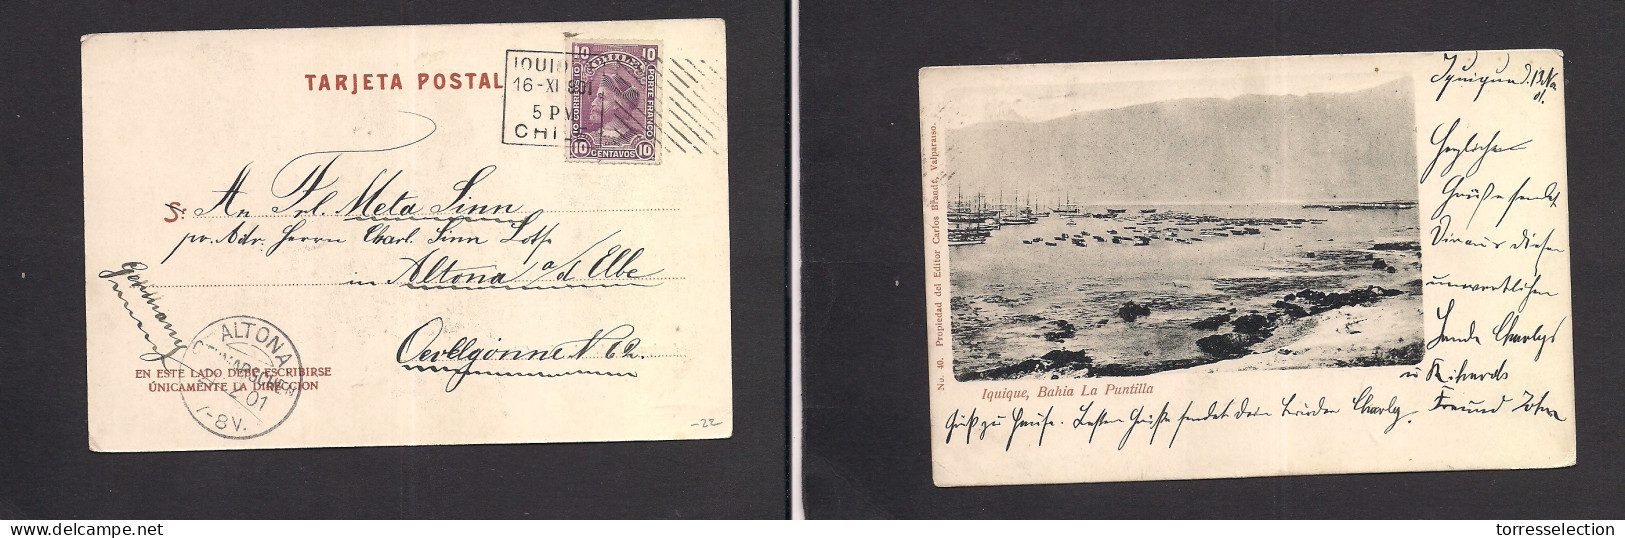 Chile - XX. 1901 (16 Nov) Iquique - Germany, Altona (21 Dec) Iquique Bahia Fkd Photo Ppc. Fine. - Cile